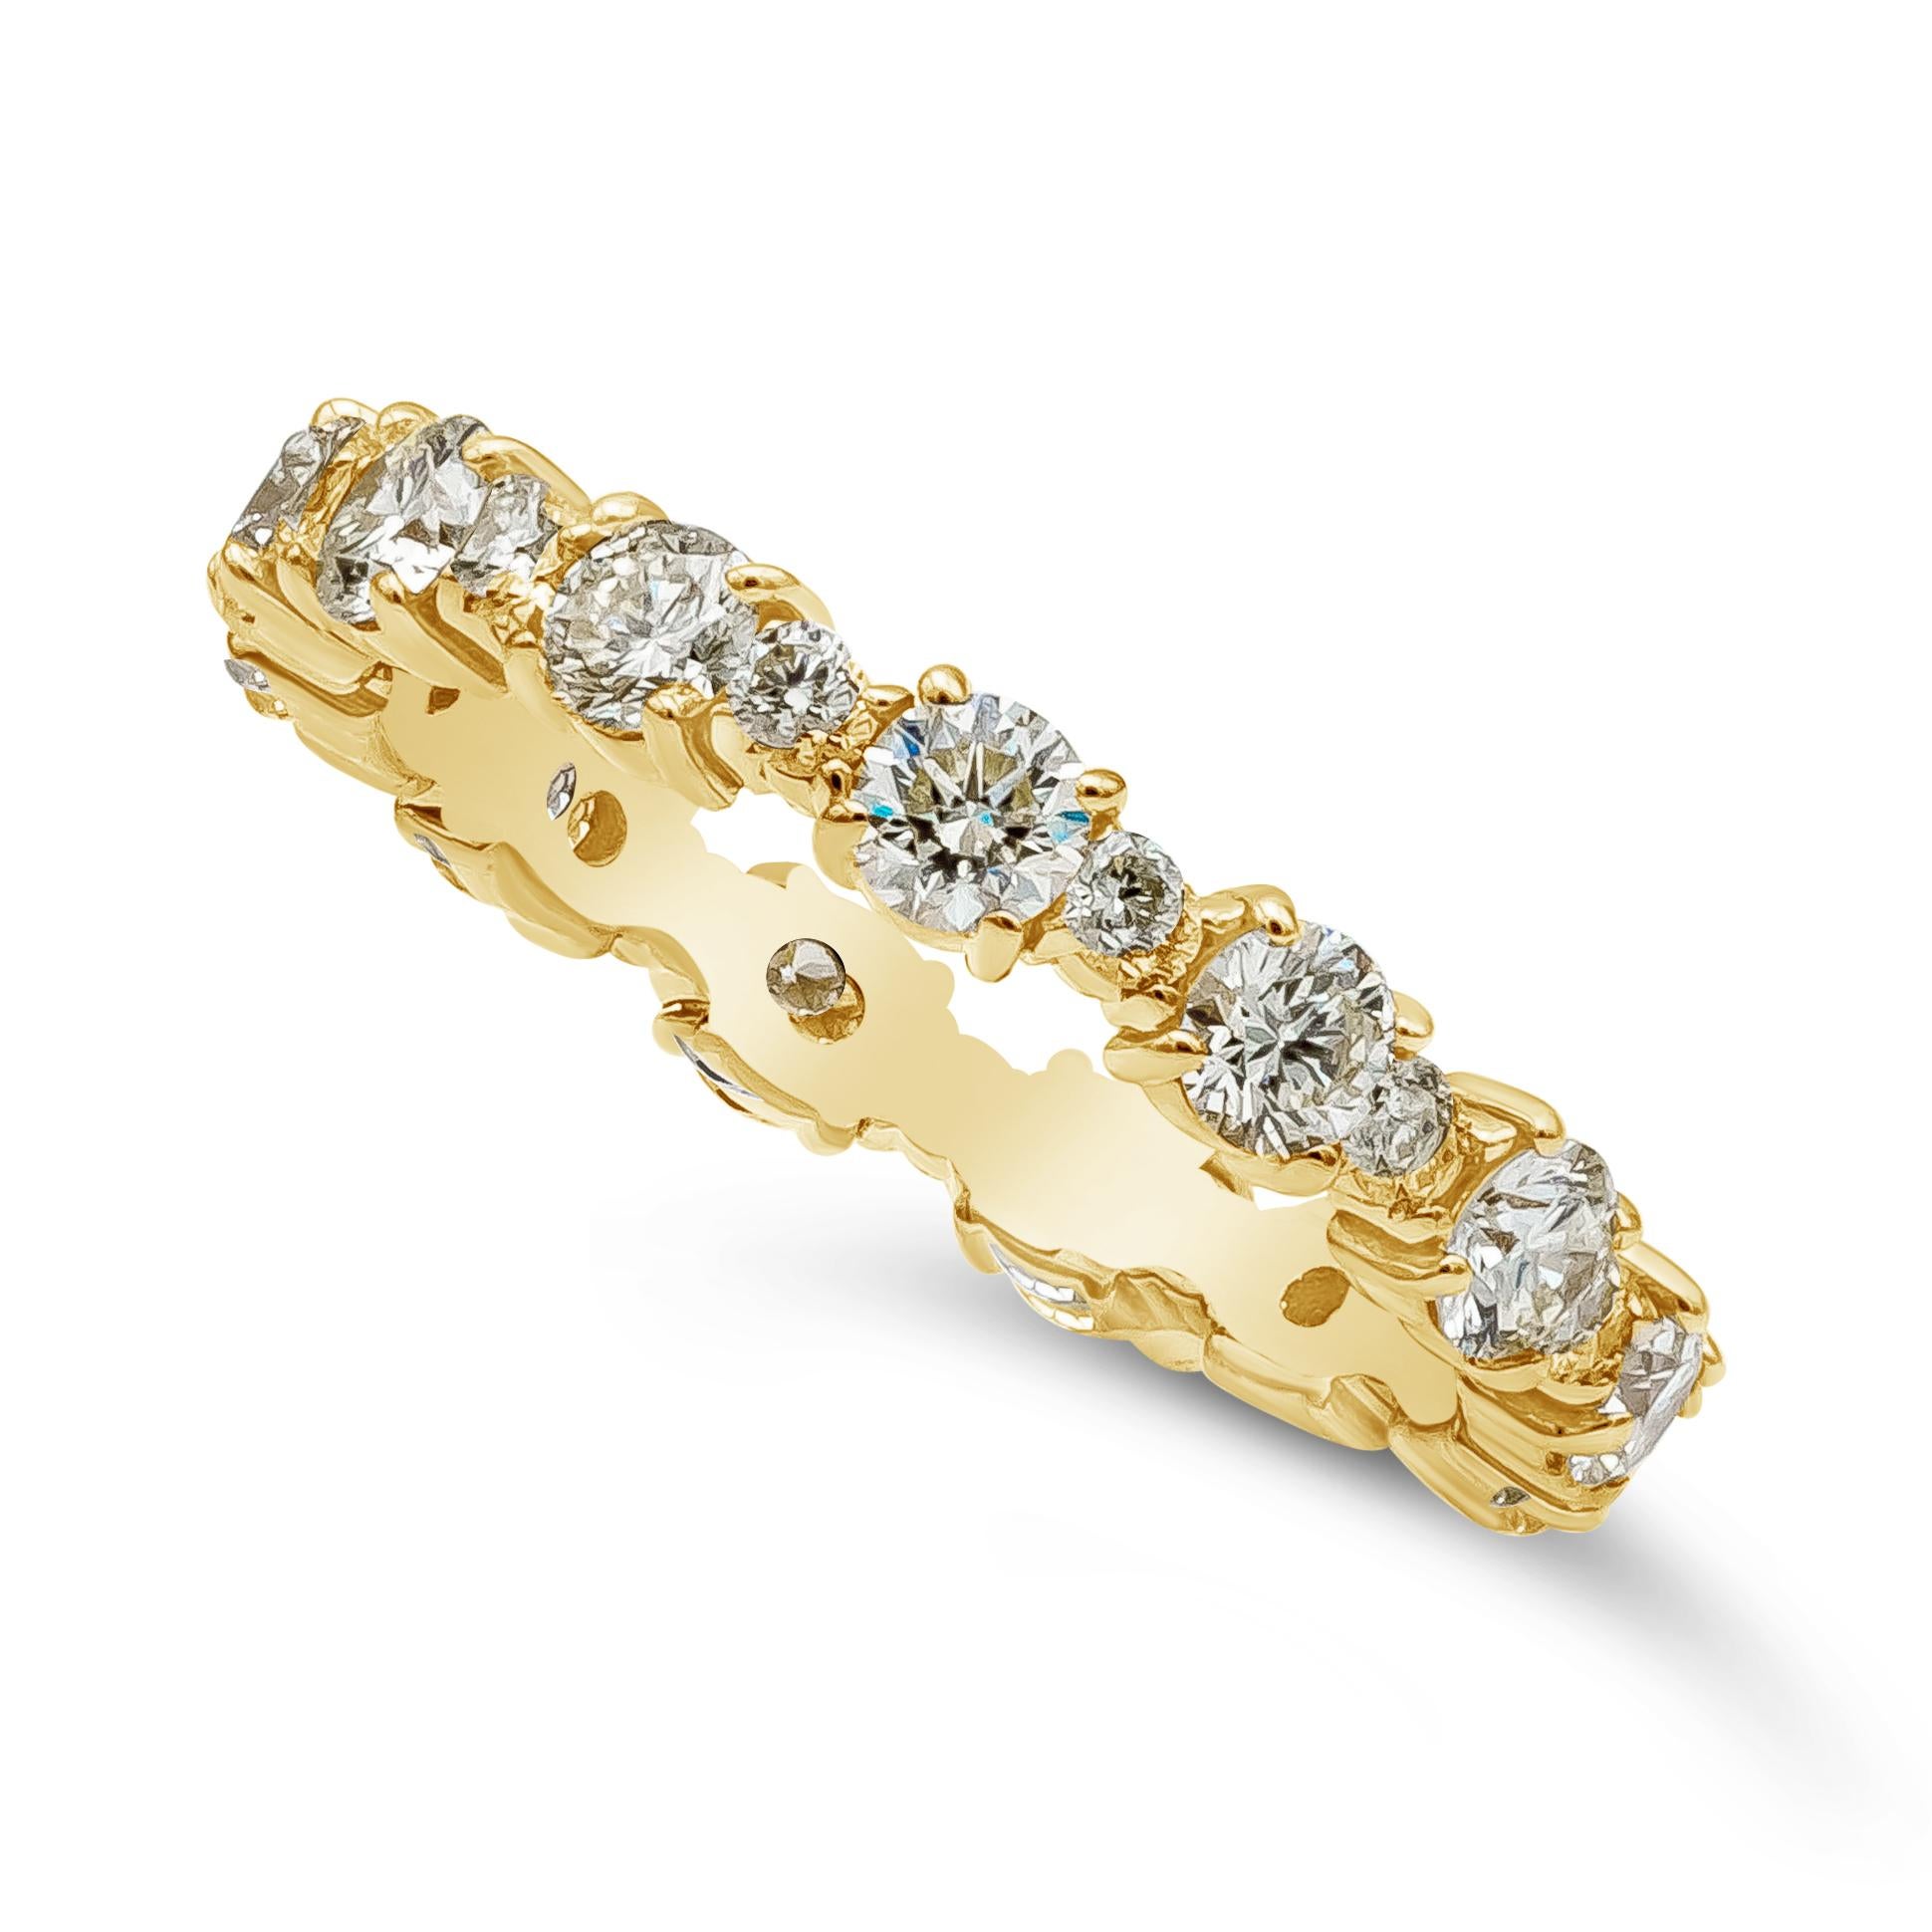 Contemporary Roman Malakov 1.23 Carat Total Round Diamond Eternity Wedding Band Ring